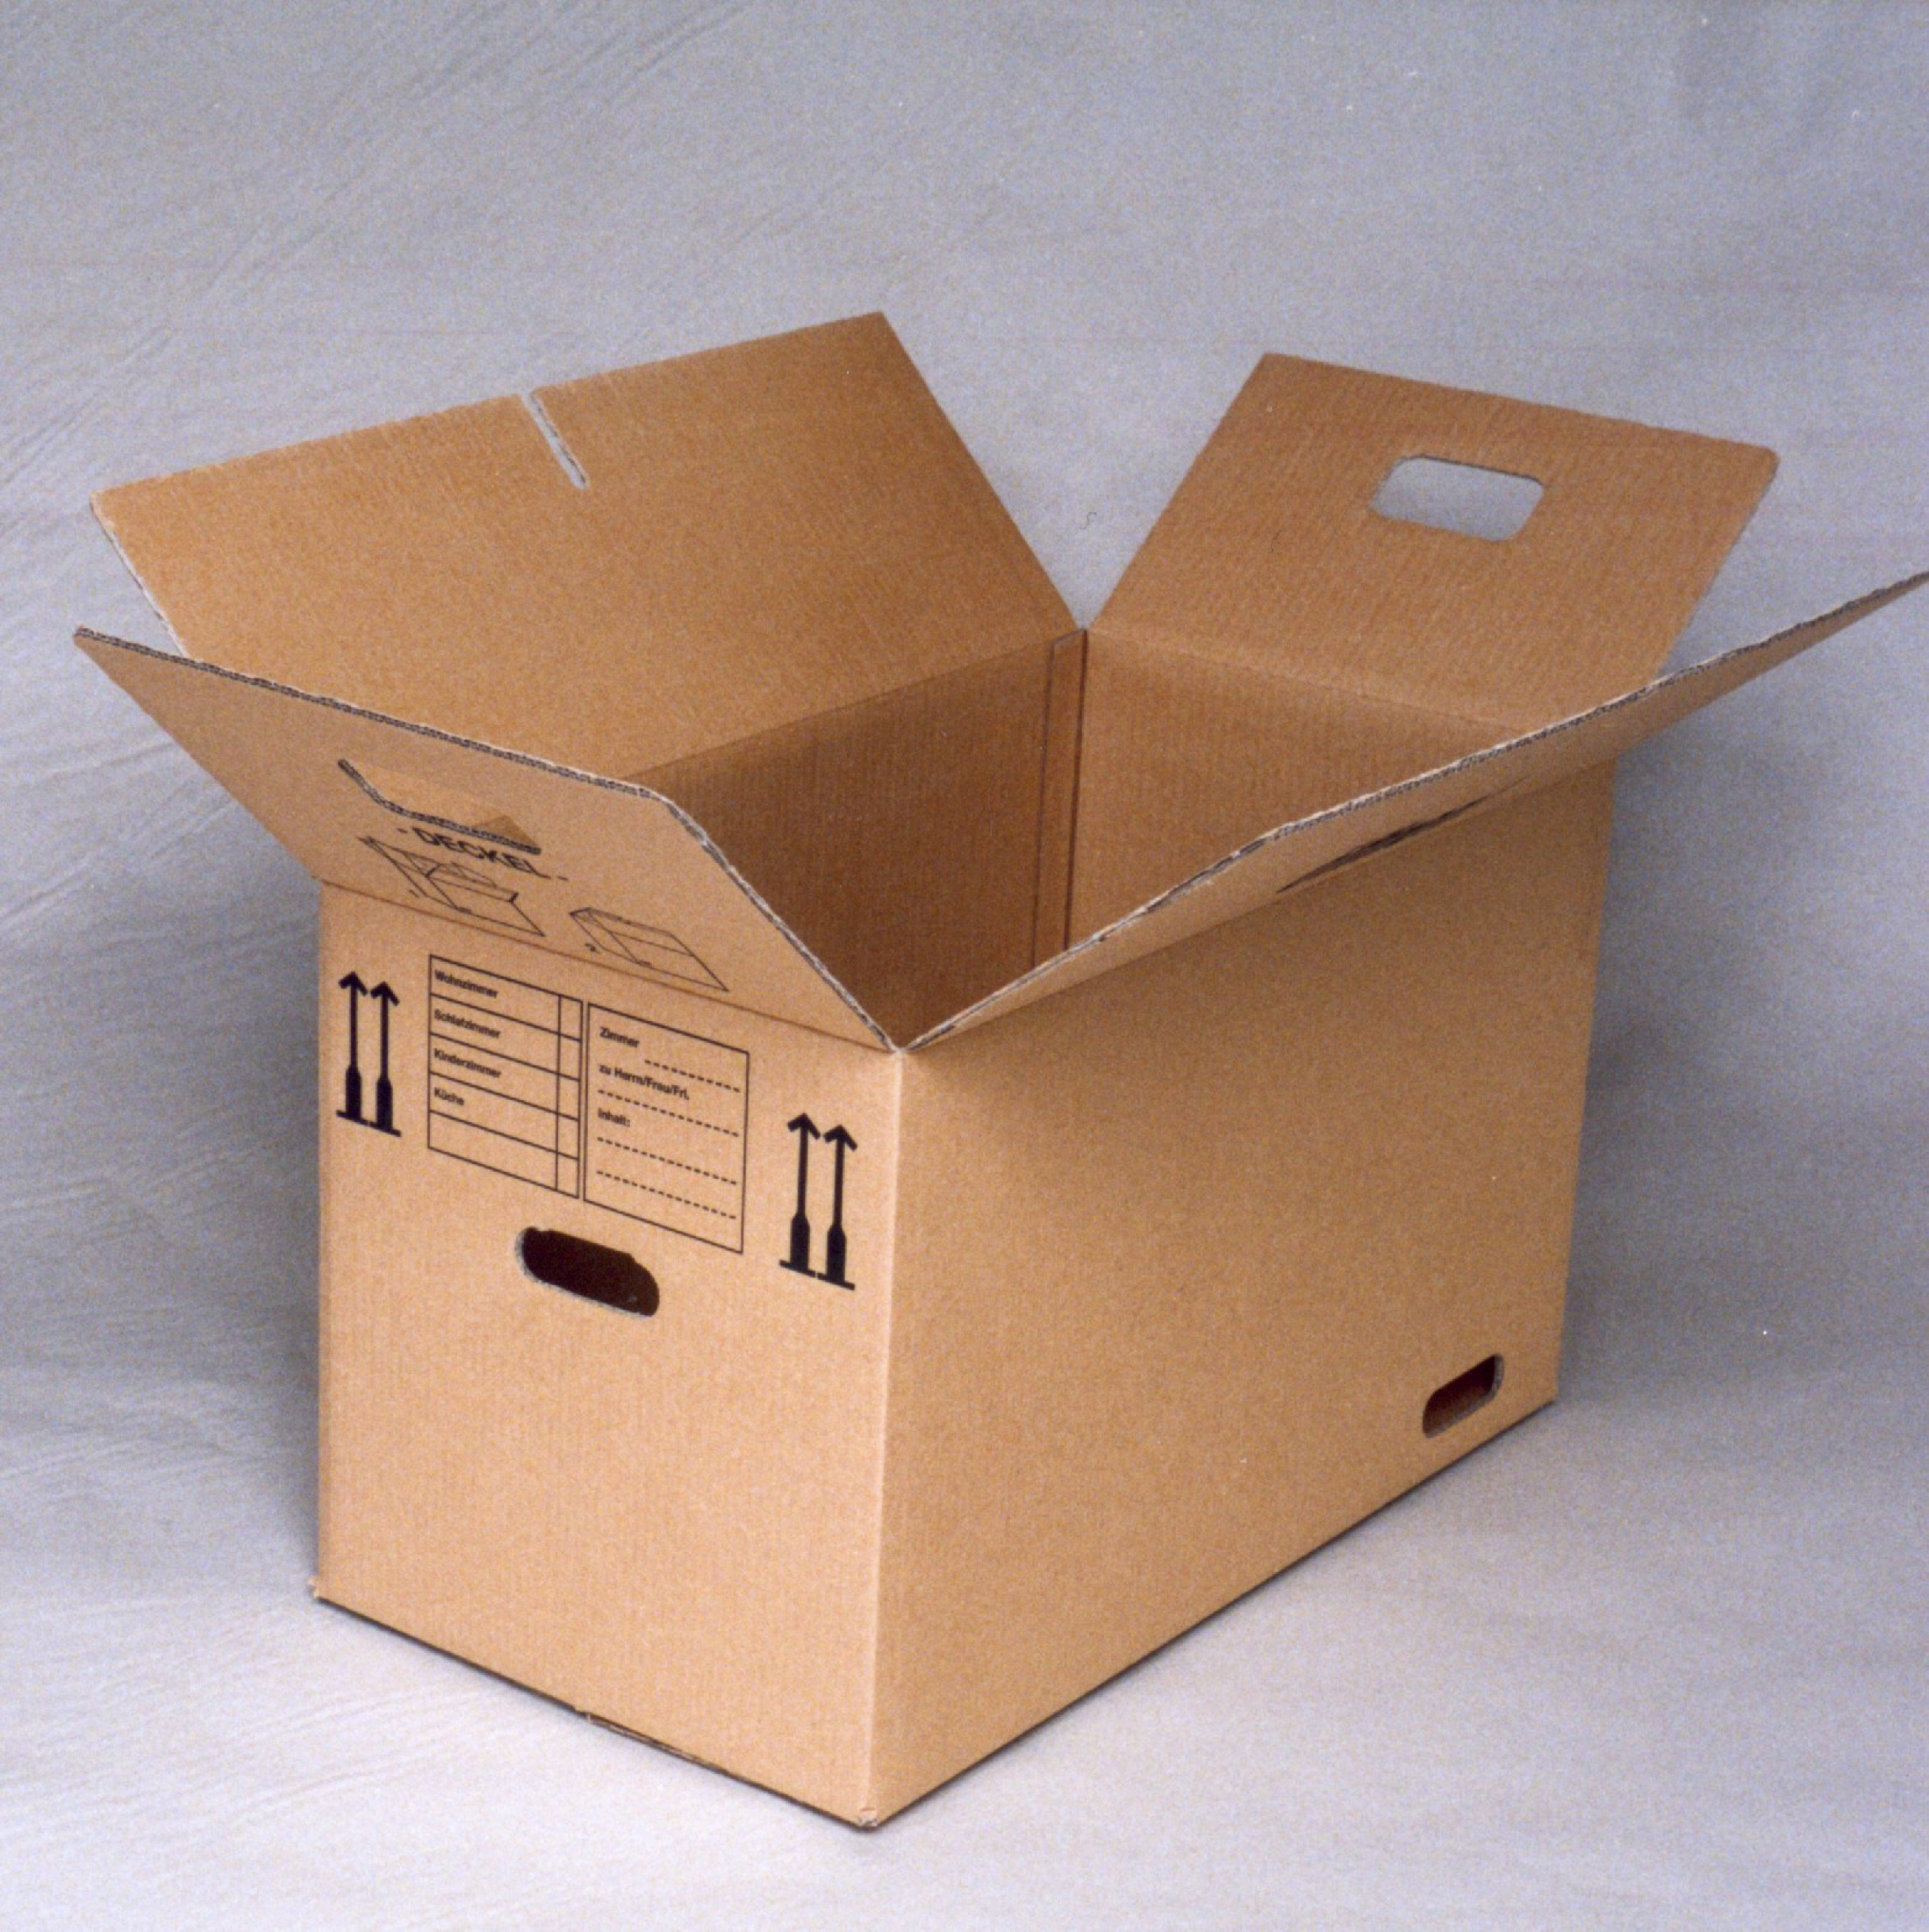 Cardboard box.